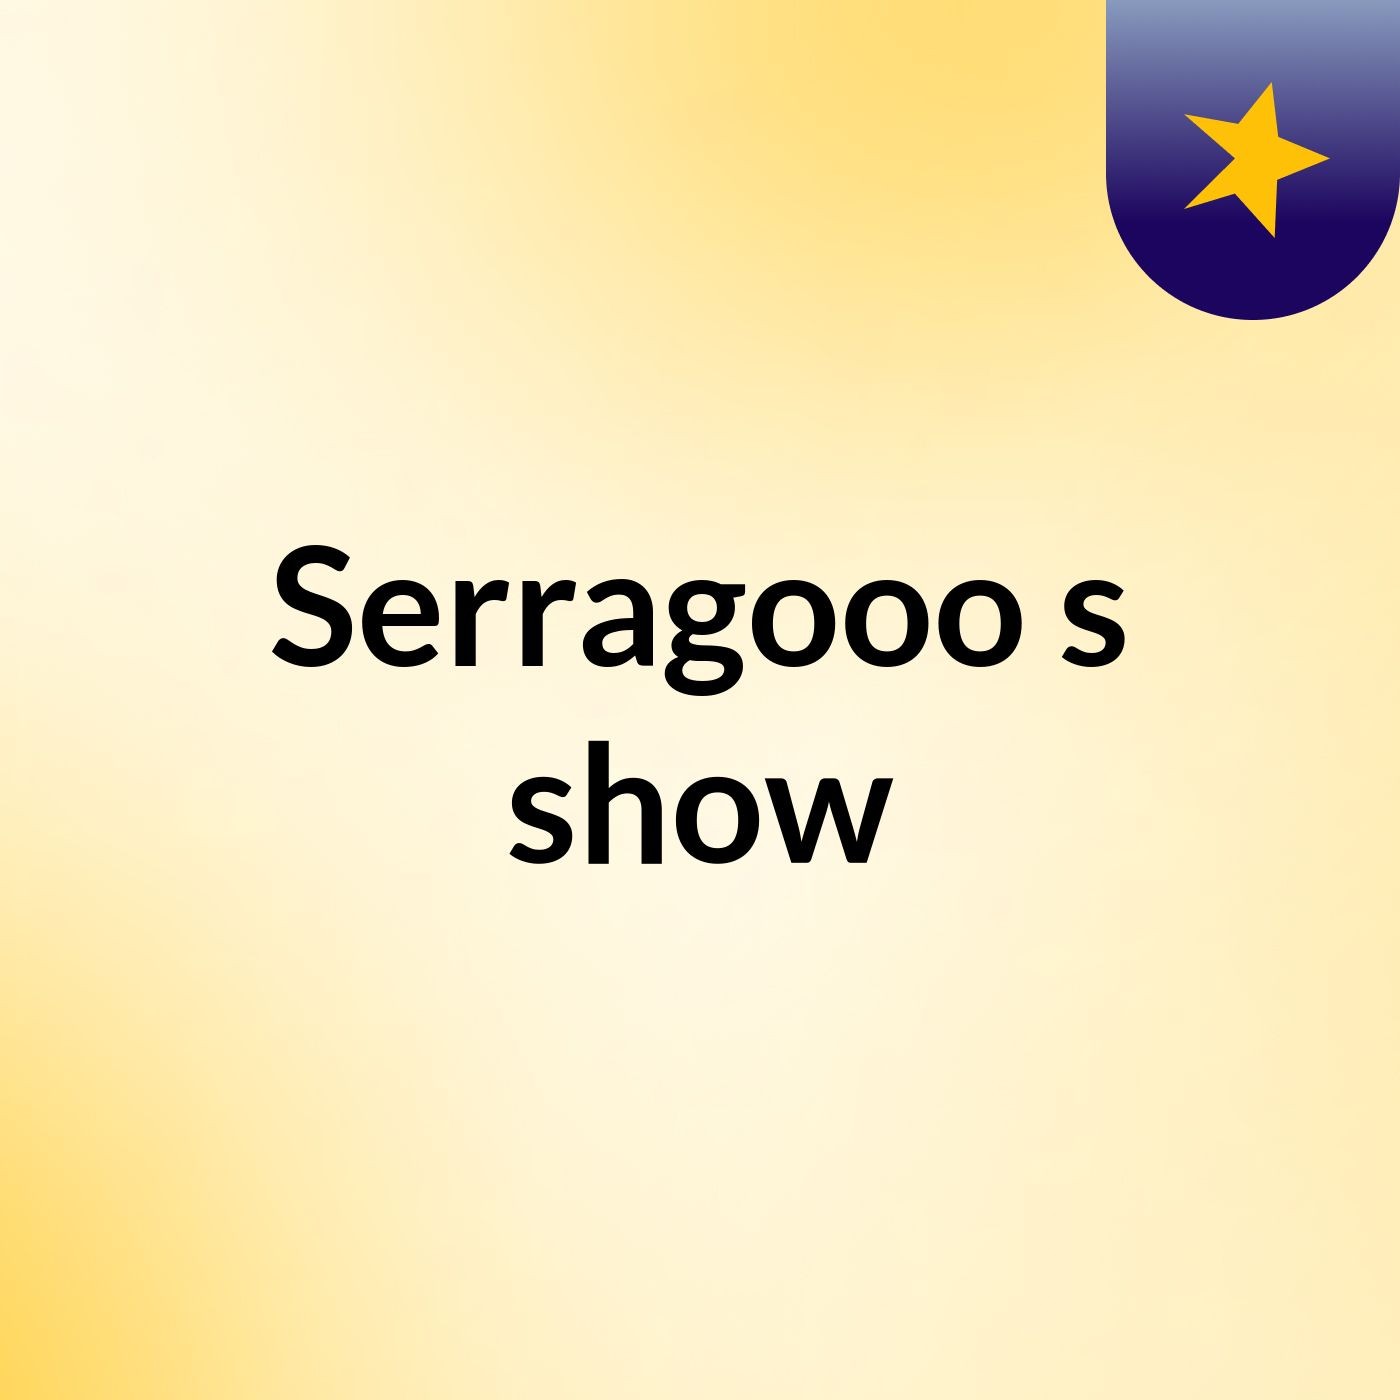 Serragooo's show